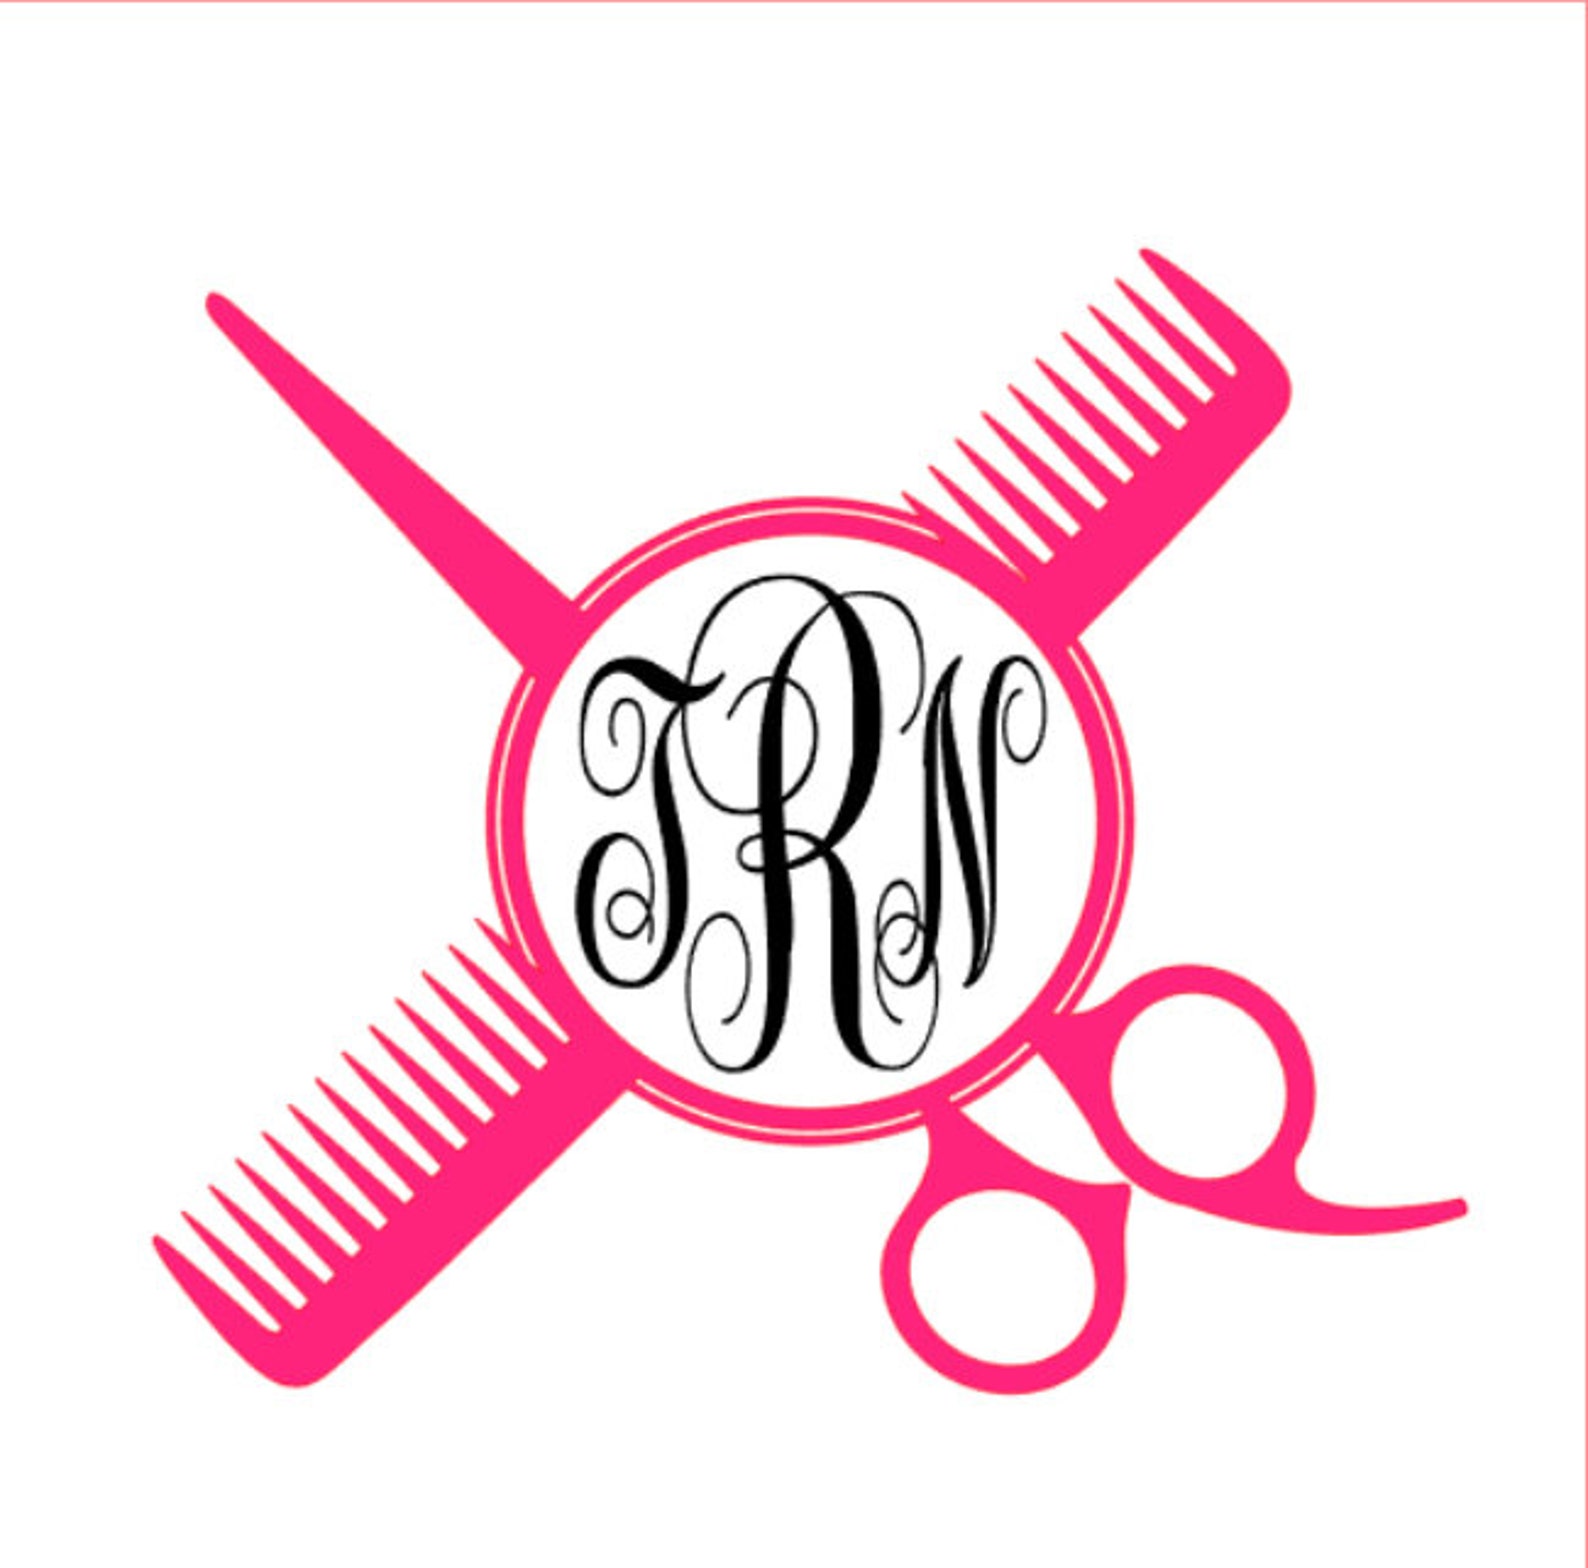 Парикмахер по английски. Логотип парикмахера. Логотип парикмахерской с ножницами. Логотип ножницы и расческа. Логотип салона красоты.